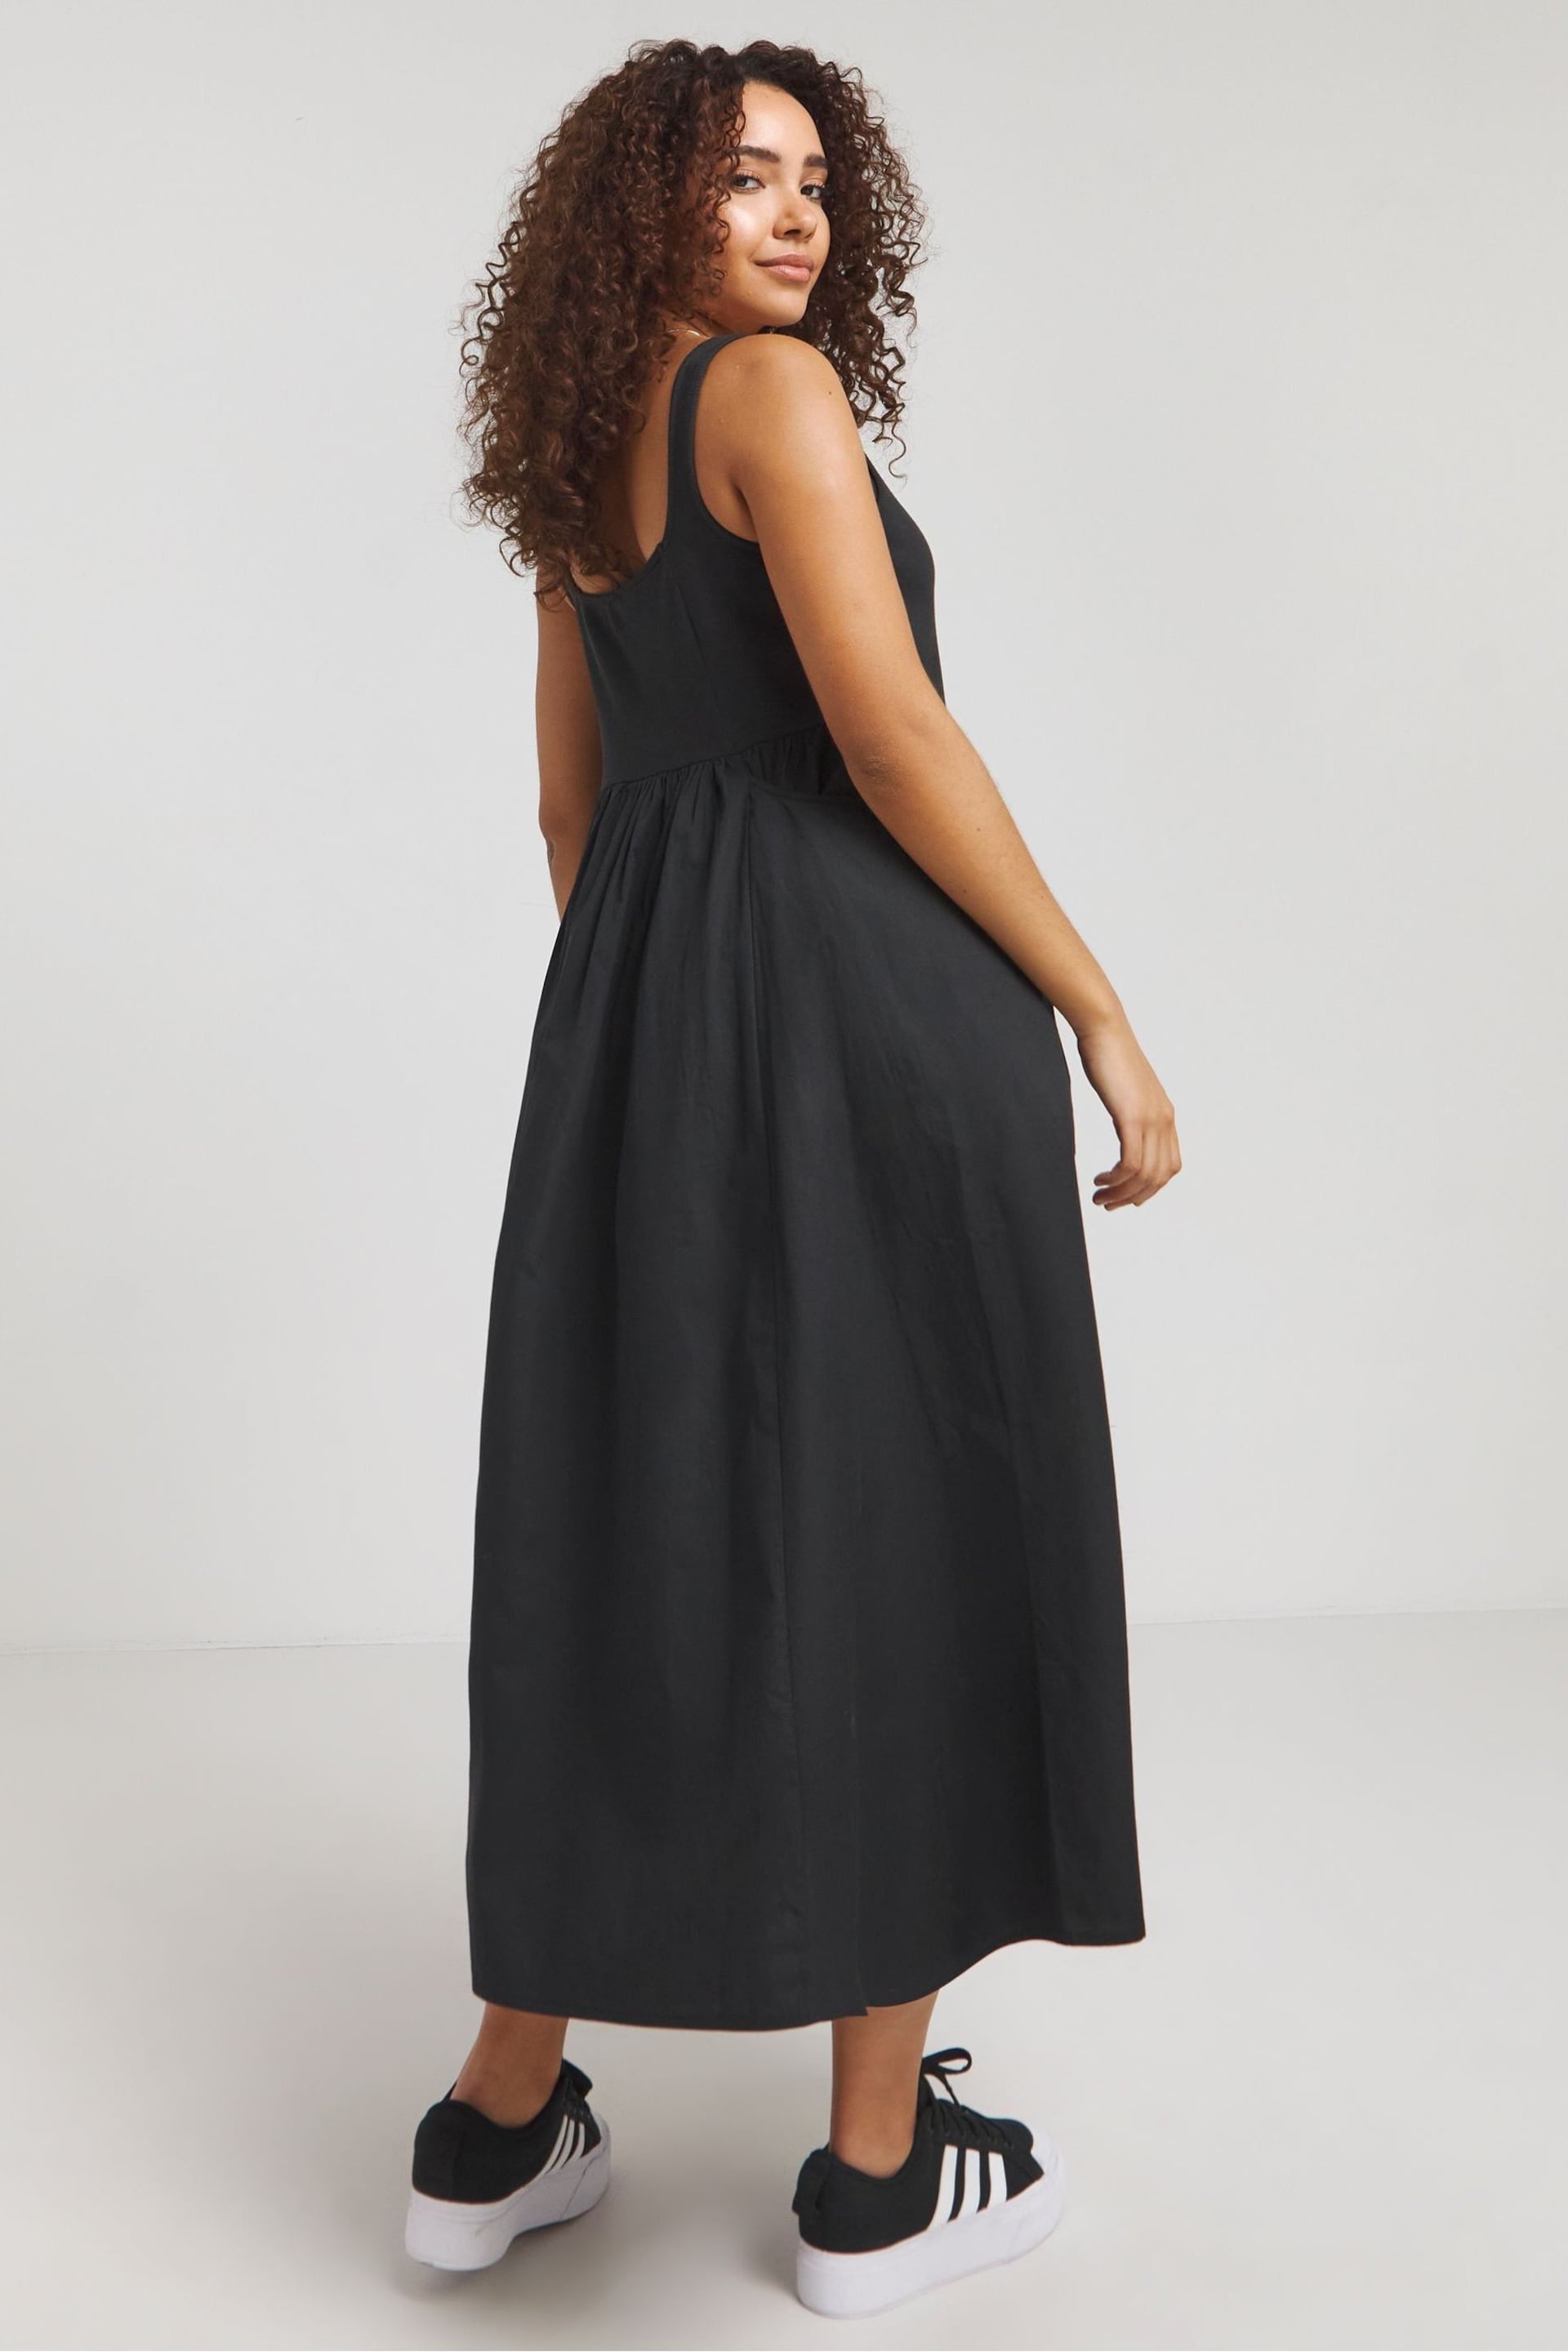 Simply Be Black Jersey Poplin Mix Apron Dress - Image 3 of 4